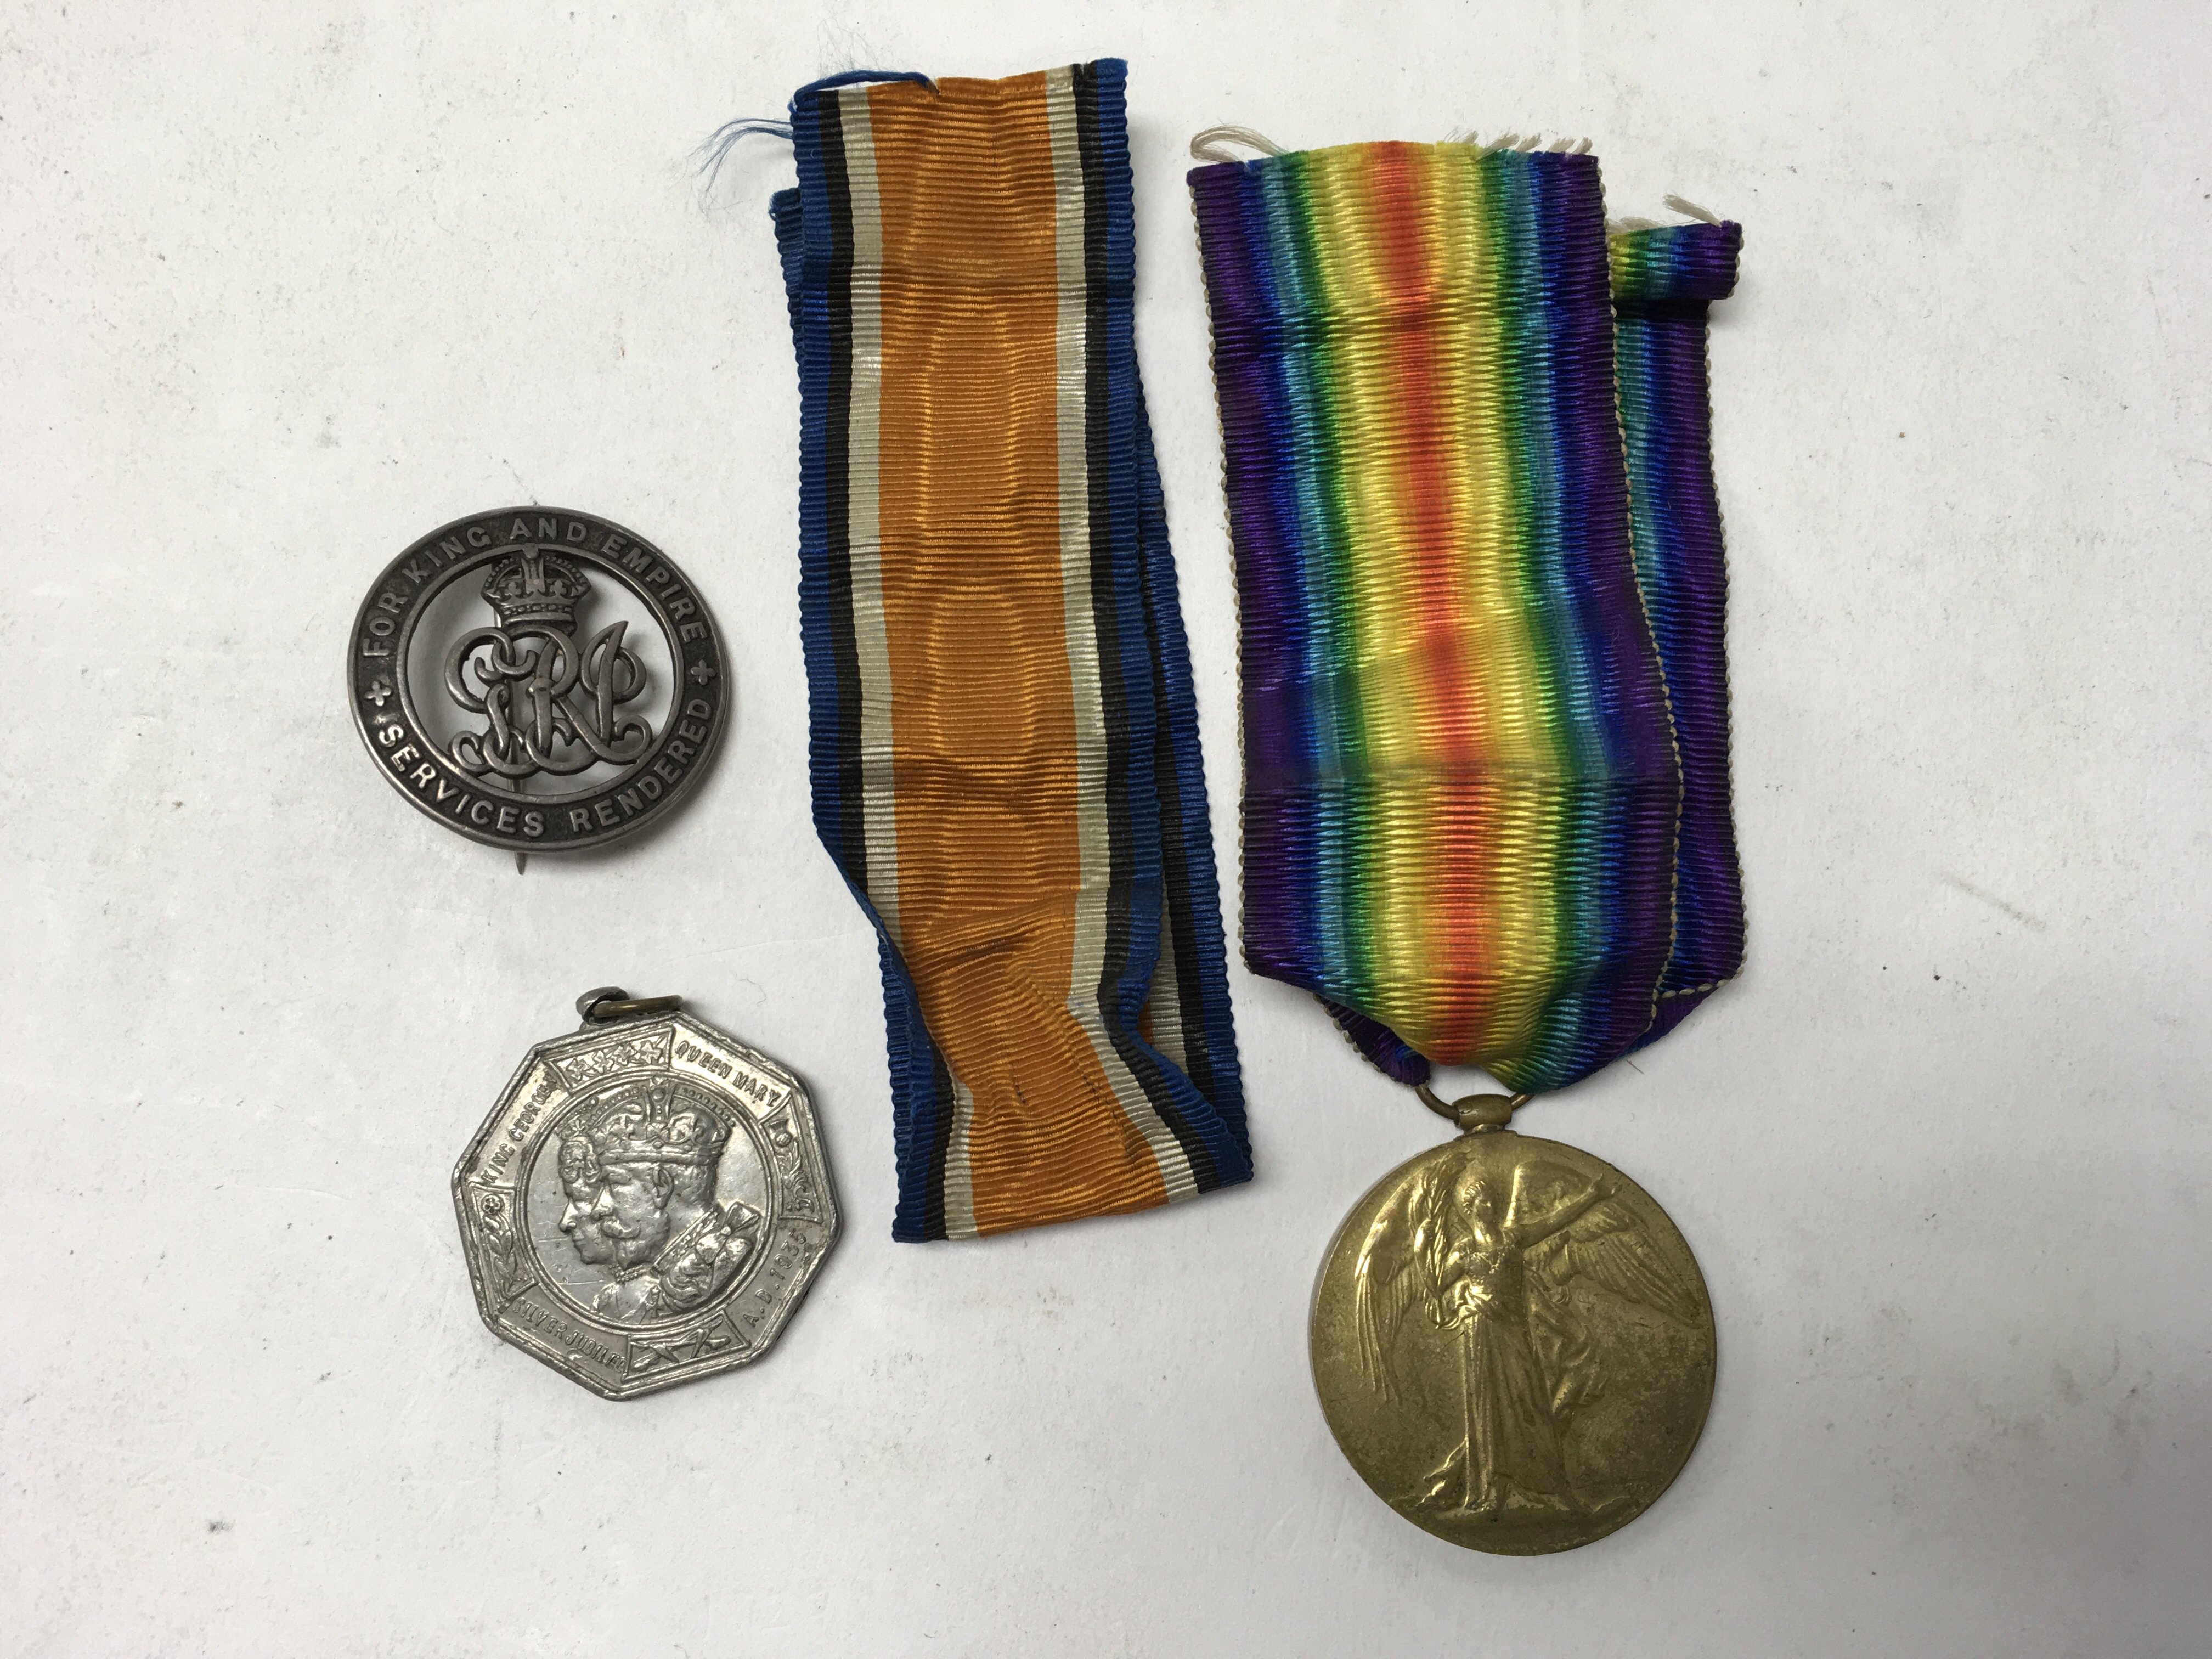 A WW1 peace medal awarded to 2821 OVR.W.A.MC GREGO